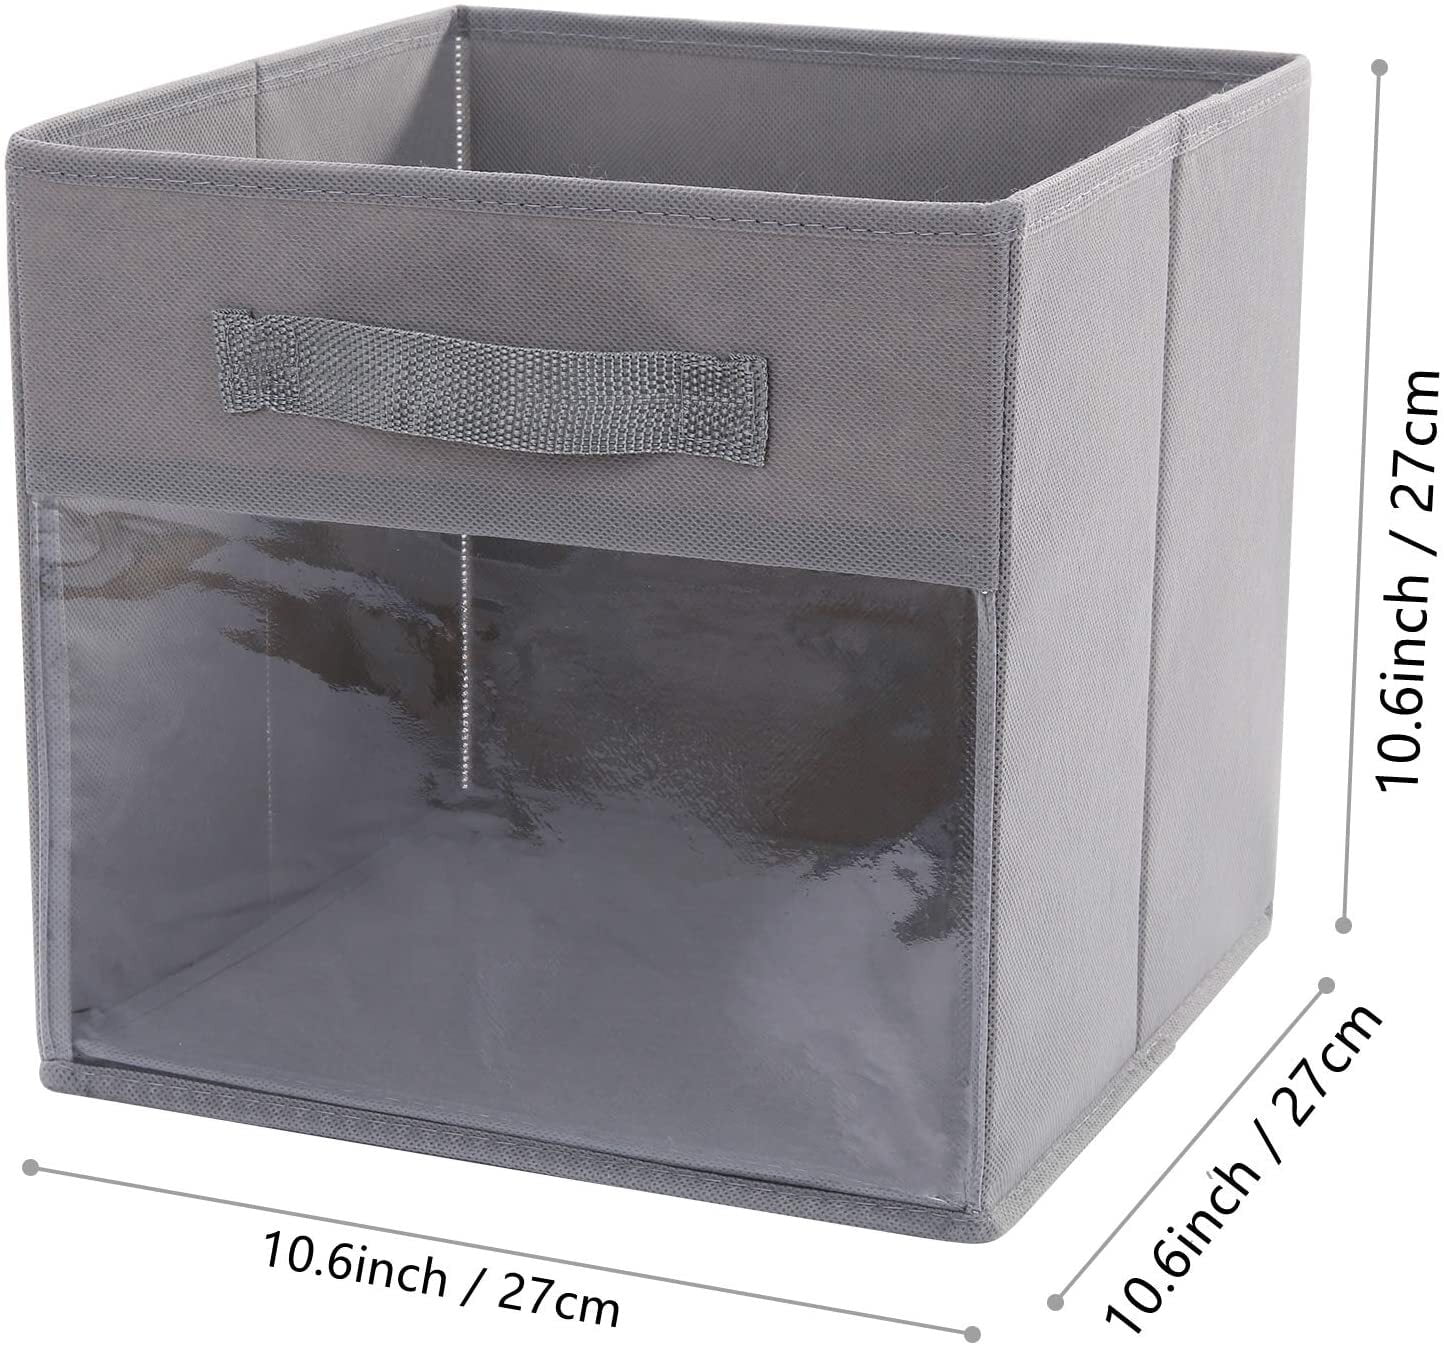 dosili Cube Storage Organizer Non-Woven Under Bed Storage Bag Zipper  Storage Bins with Lids Clear Window Space Saver Bags (Horizontal) 